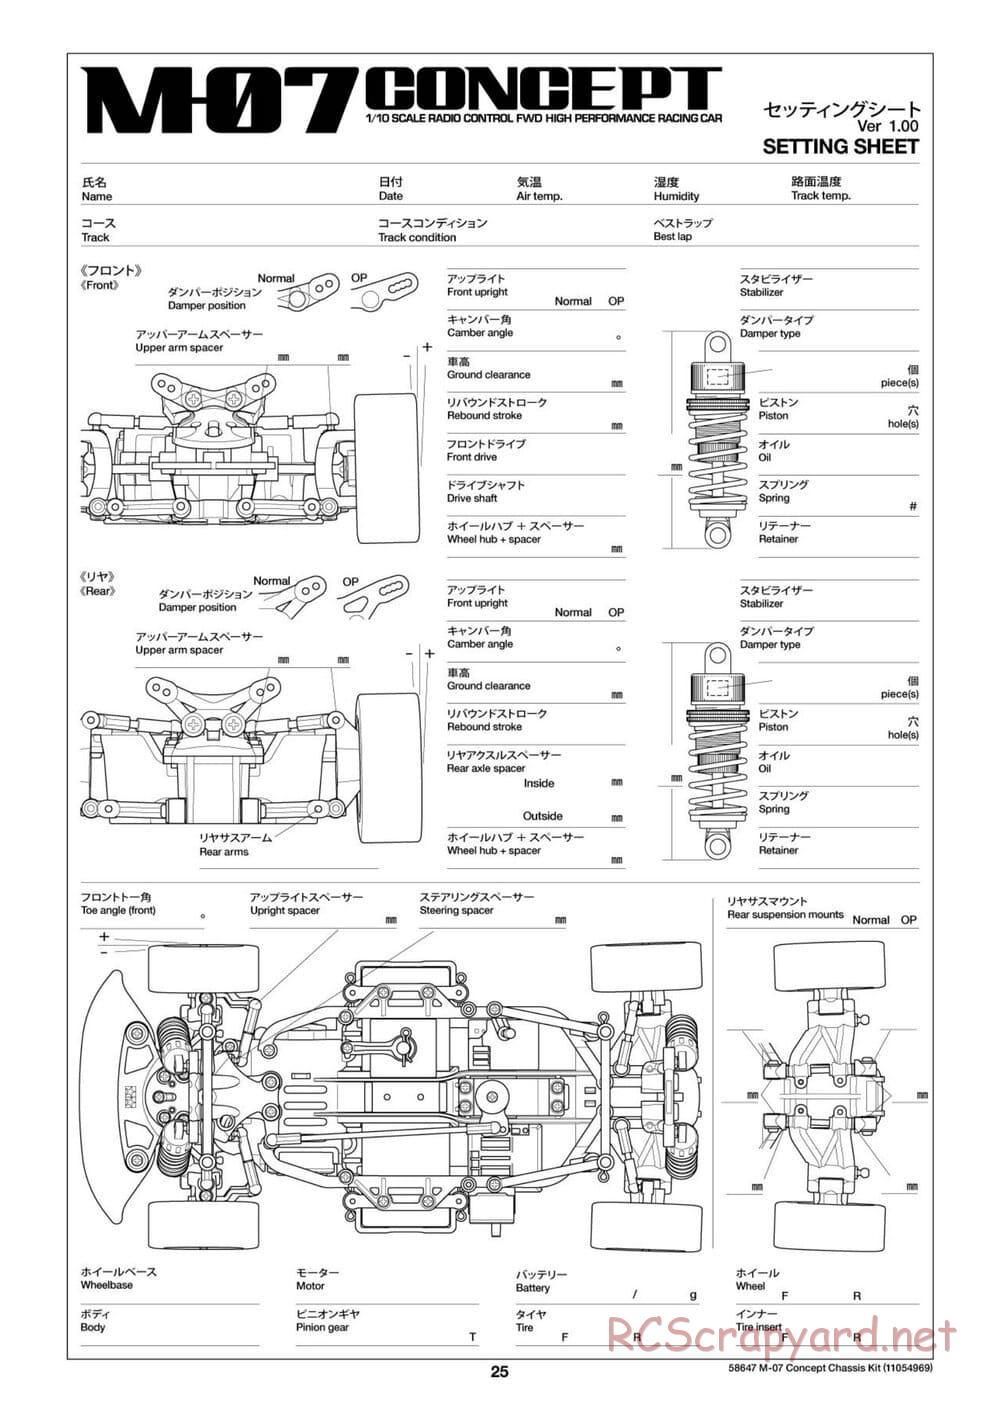 Tamiya - M-07 Concept Chassis - Manual - Page 25